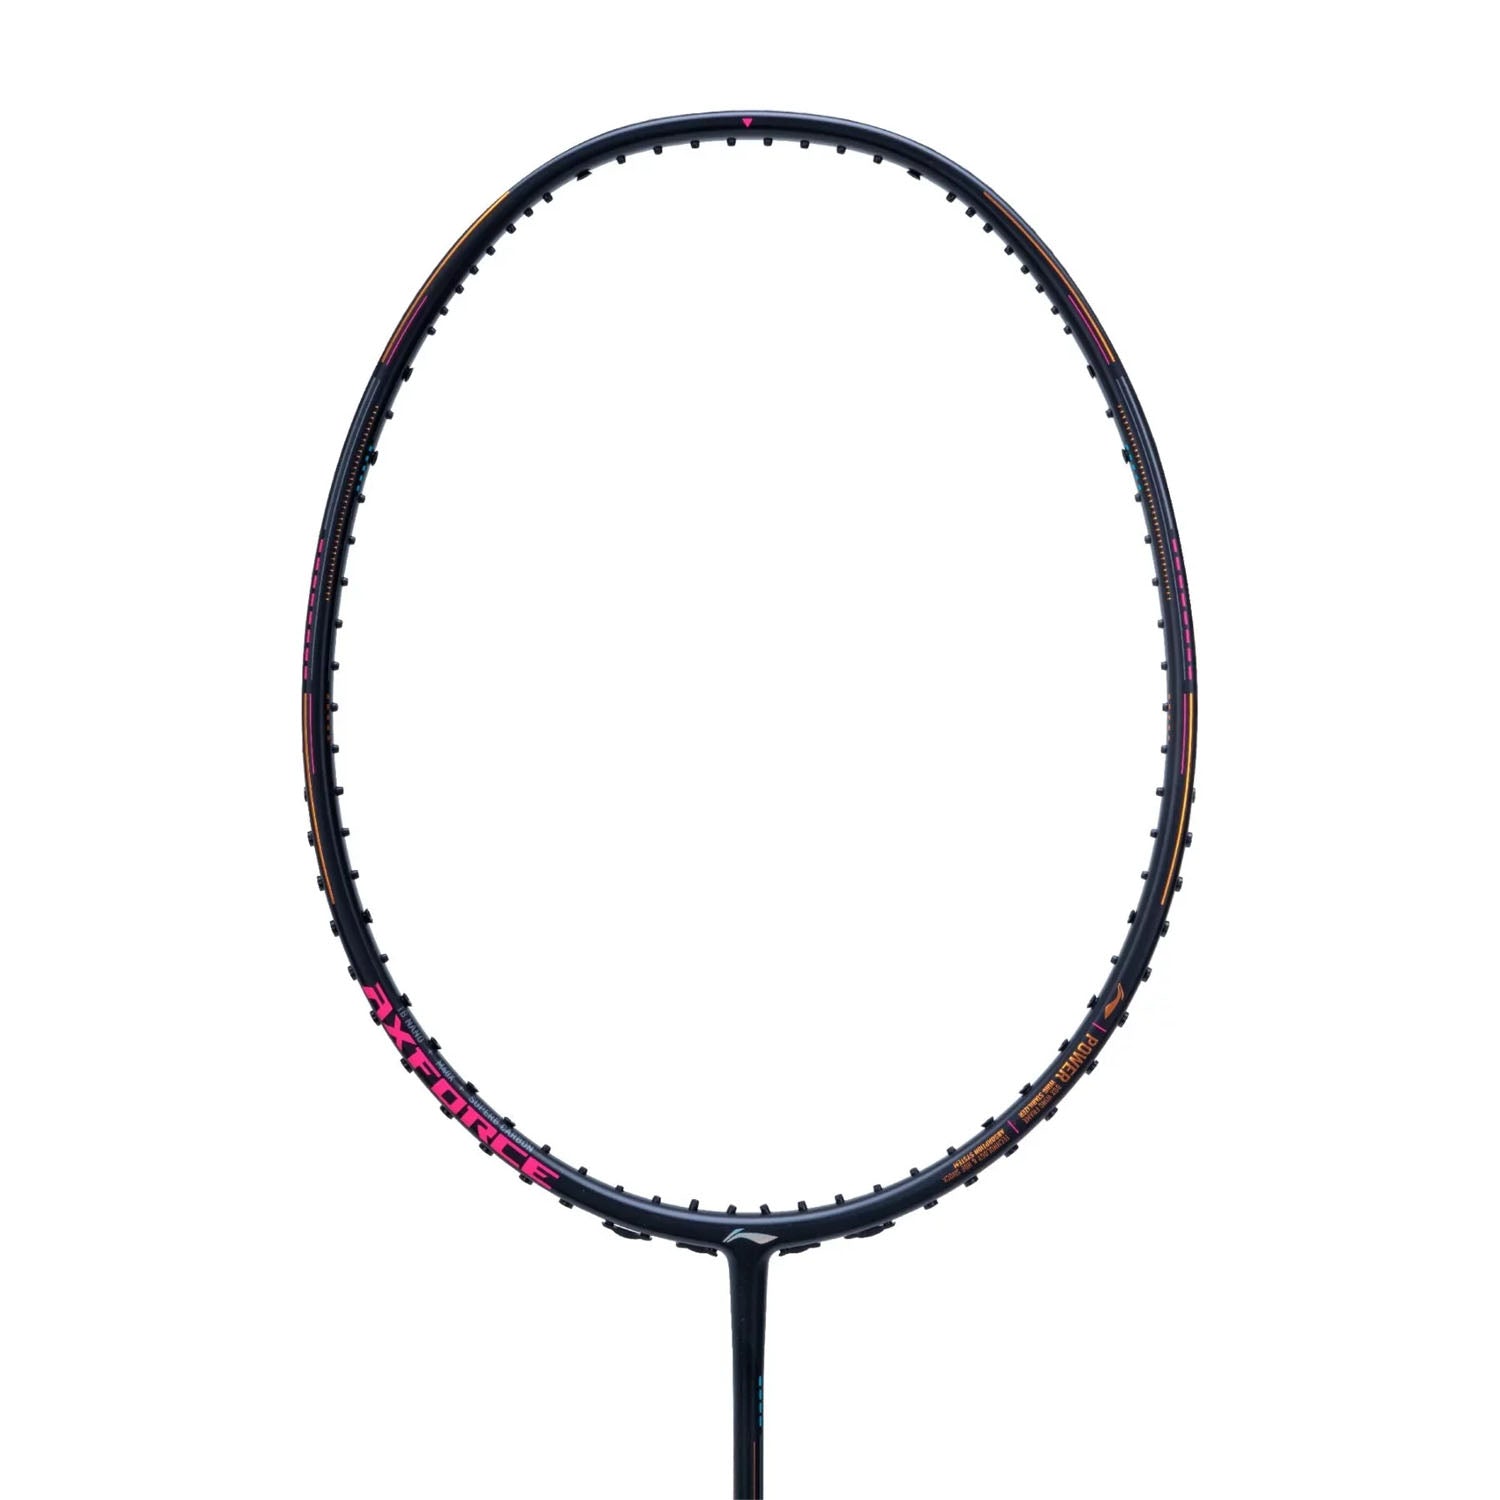 Li-Ning AXFORCE 80 Badminton Racquet, Black - Best Price online Prokicksports.com